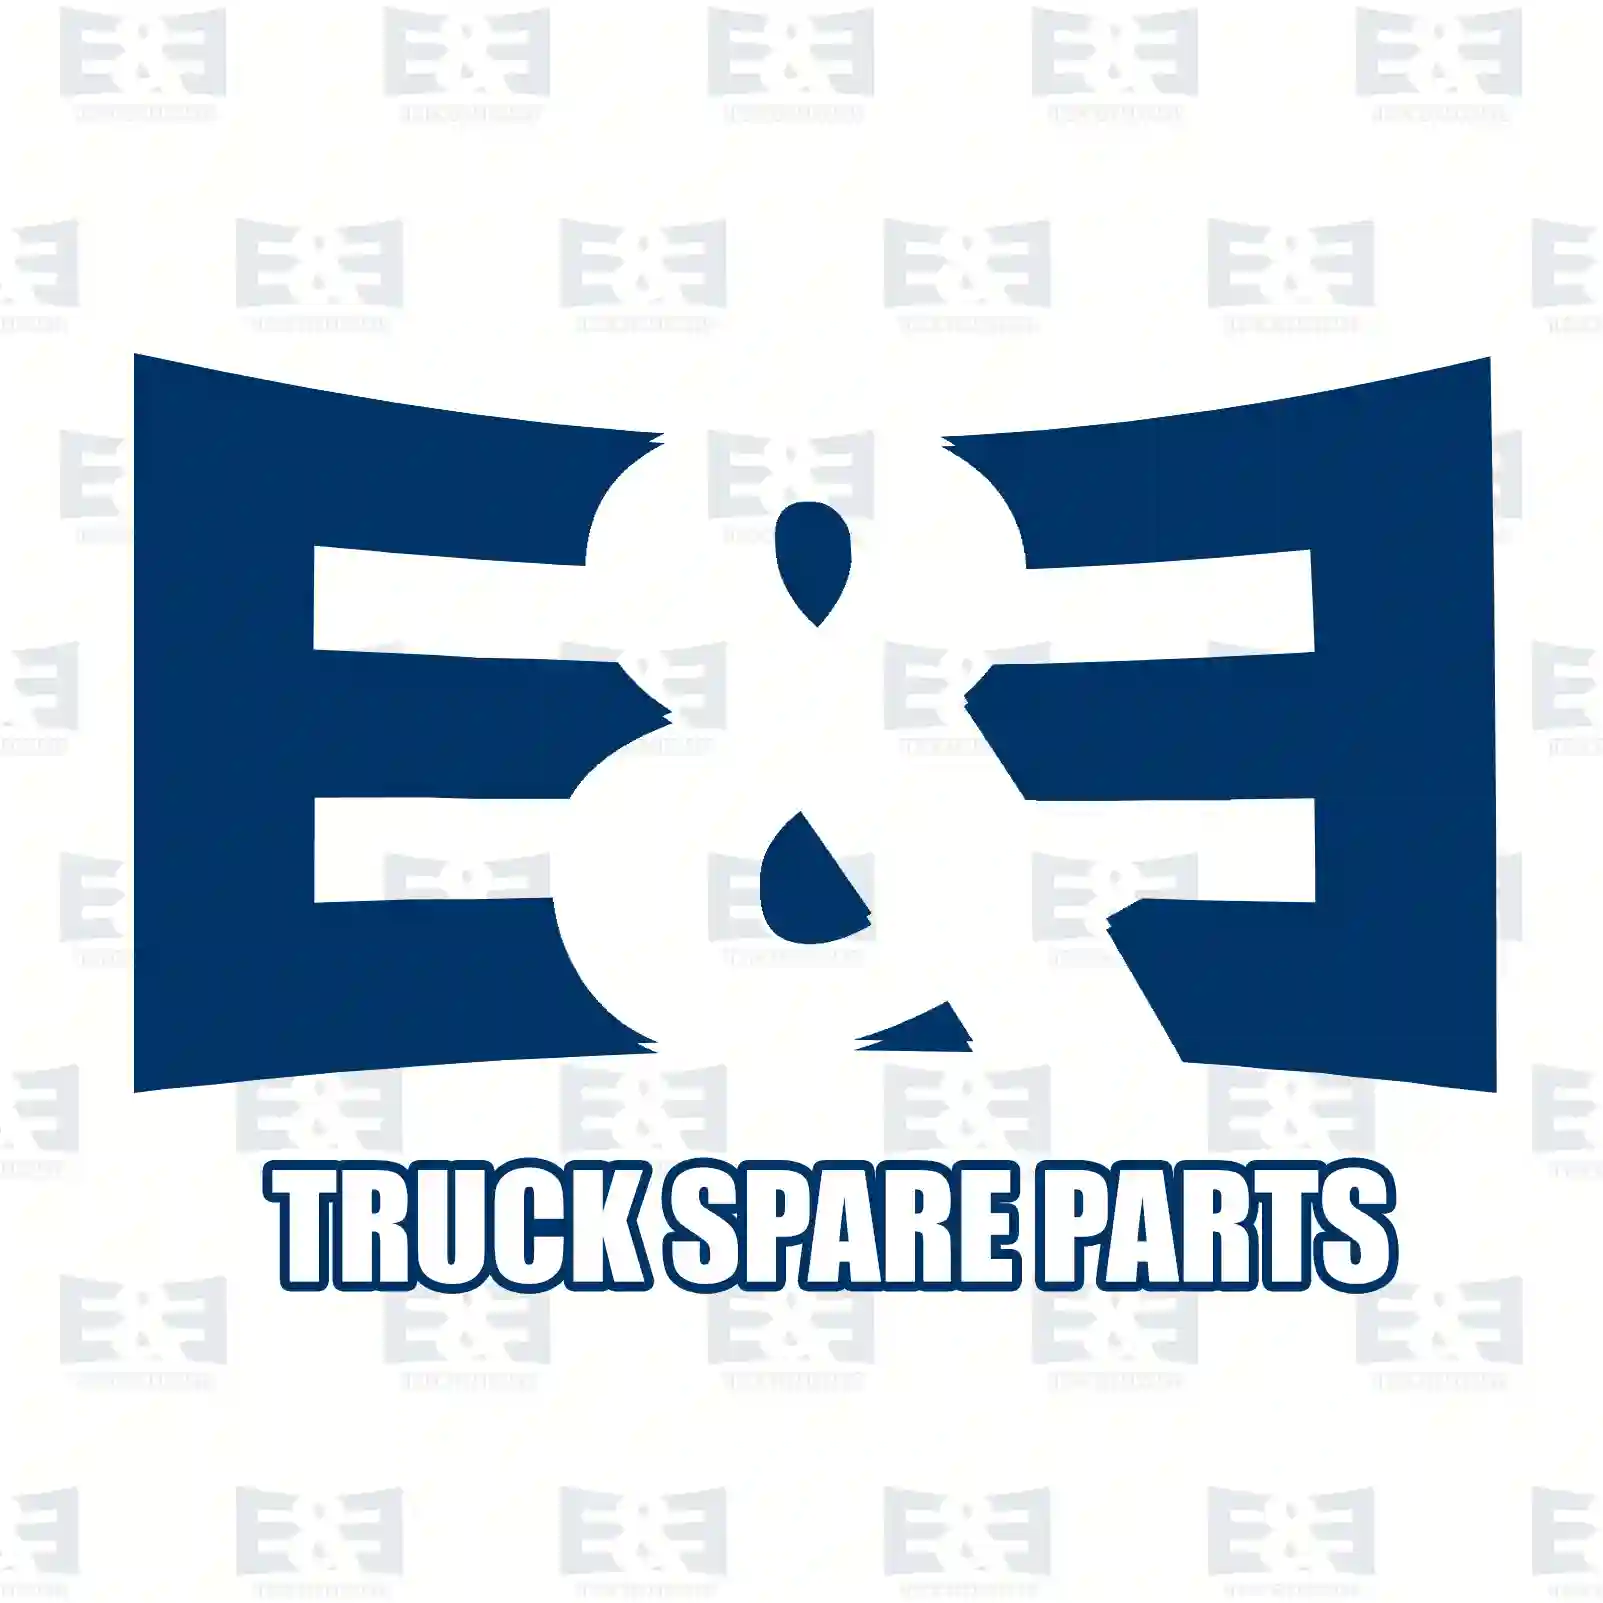 Shock absorber, 2E2283696, 0013263100, 0023265300, 0023265400, 0023269800, 0023269900, 0033239700, 0033268700, 0043234400, 0043260300, 0063230700, 3713237000, ZG41585-0008 ||  2E2283696 E&E Truck Spare Parts | Truck Spare Parts, Auotomotive Spare Parts Shock absorber, 2E2283696, 0013263100, 0023265300, 0023265400, 0023269800, 0023269900, 0033239700, 0033268700, 0043234400, 0043260300, 0063230700, 3713237000, ZG41585-0008 ||  2E2283696 E&E Truck Spare Parts | Truck Spare Parts, Auotomotive Spare Parts